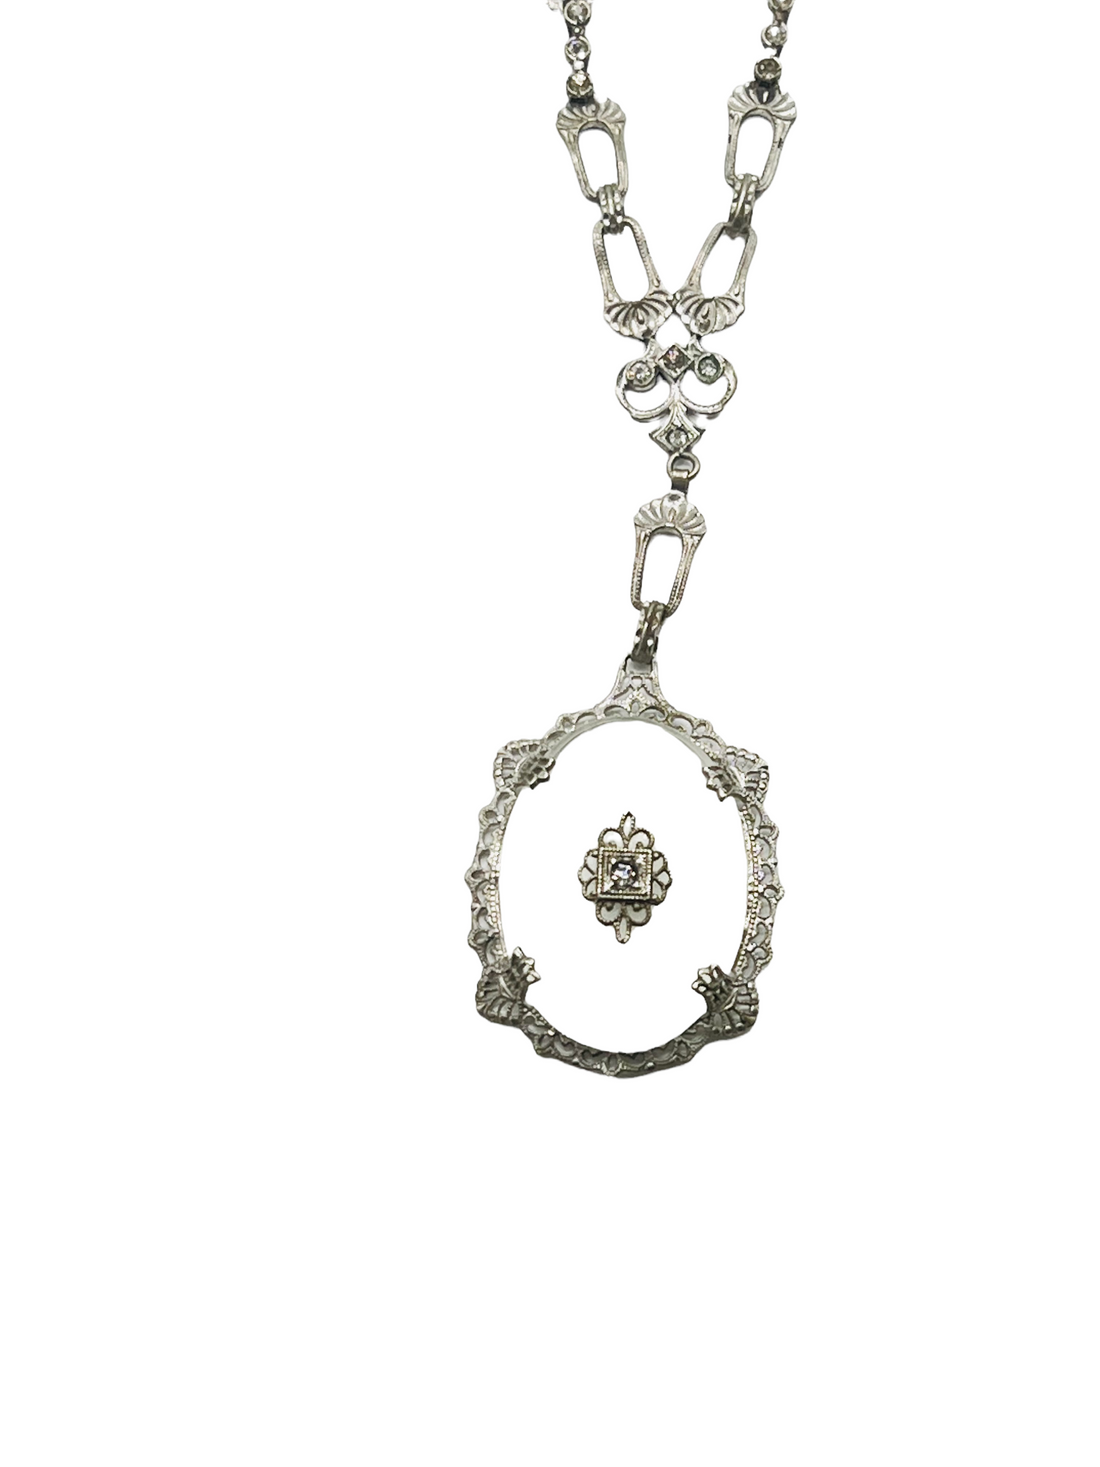 Vintage Camphor Glass Necklace by hipV Modern Vintage Jewelry.